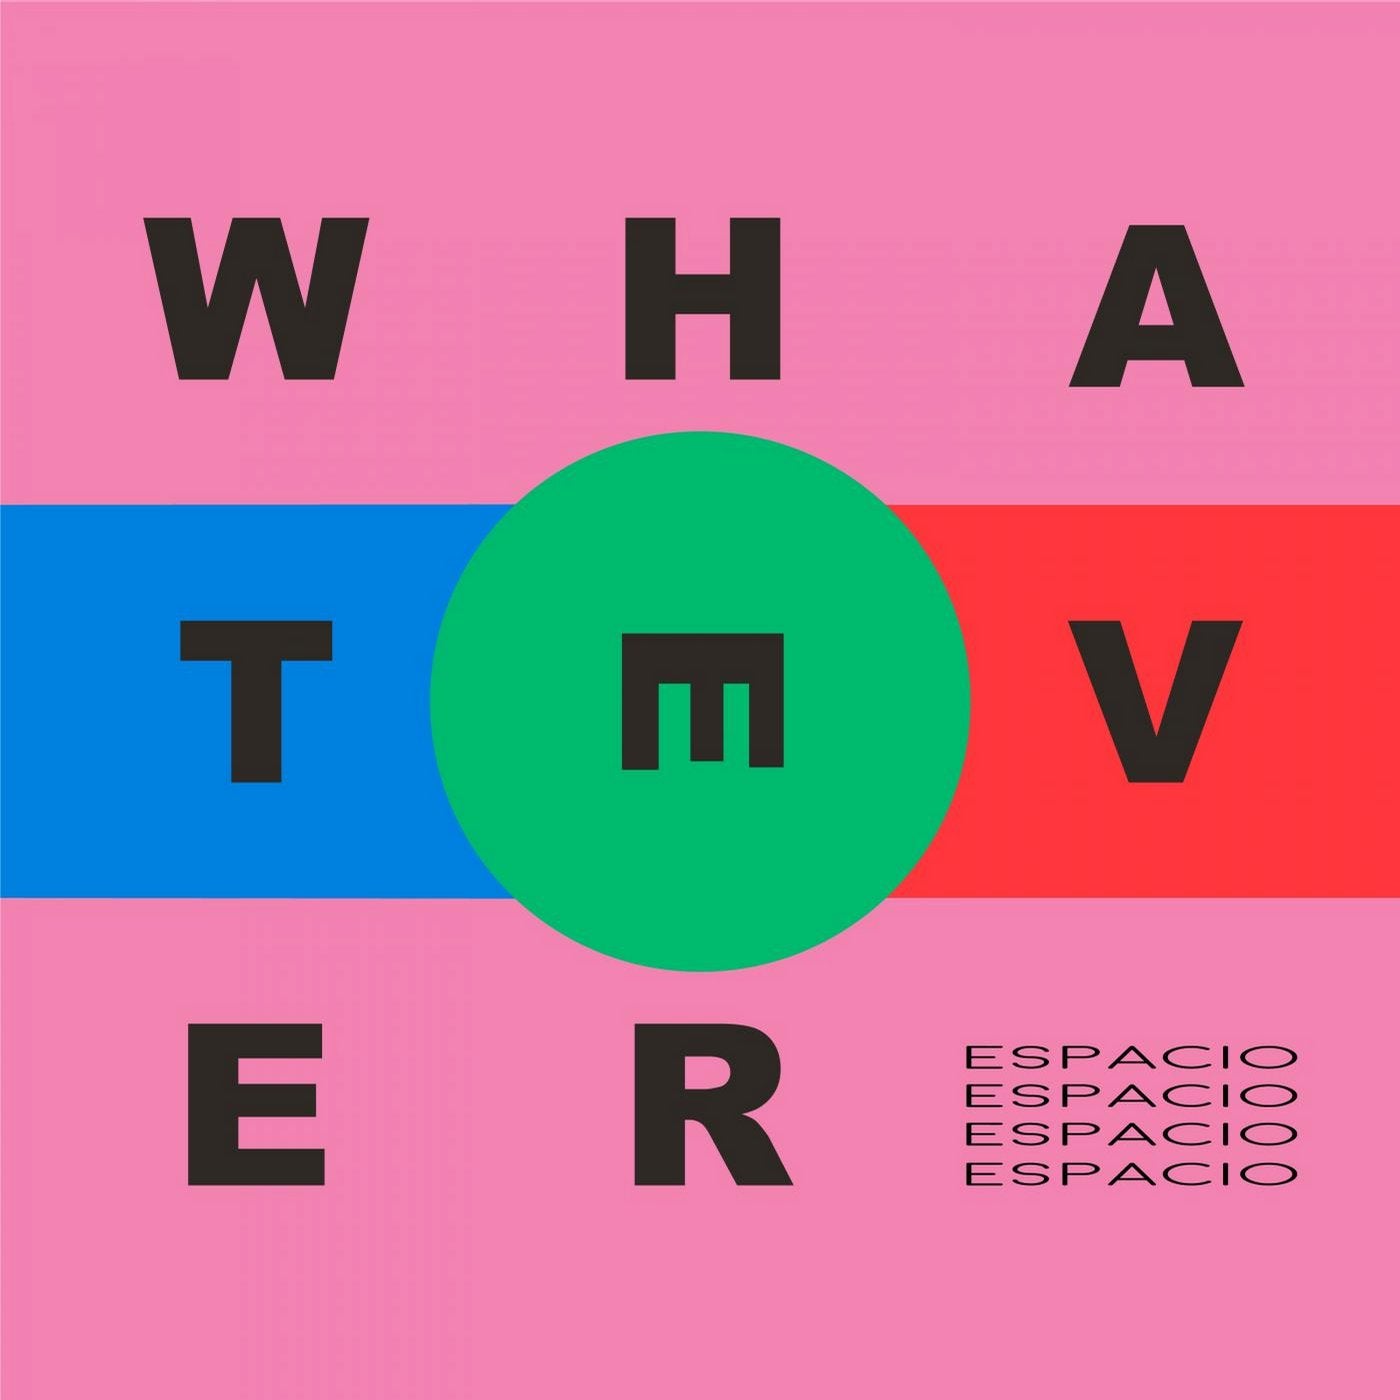 Whatever